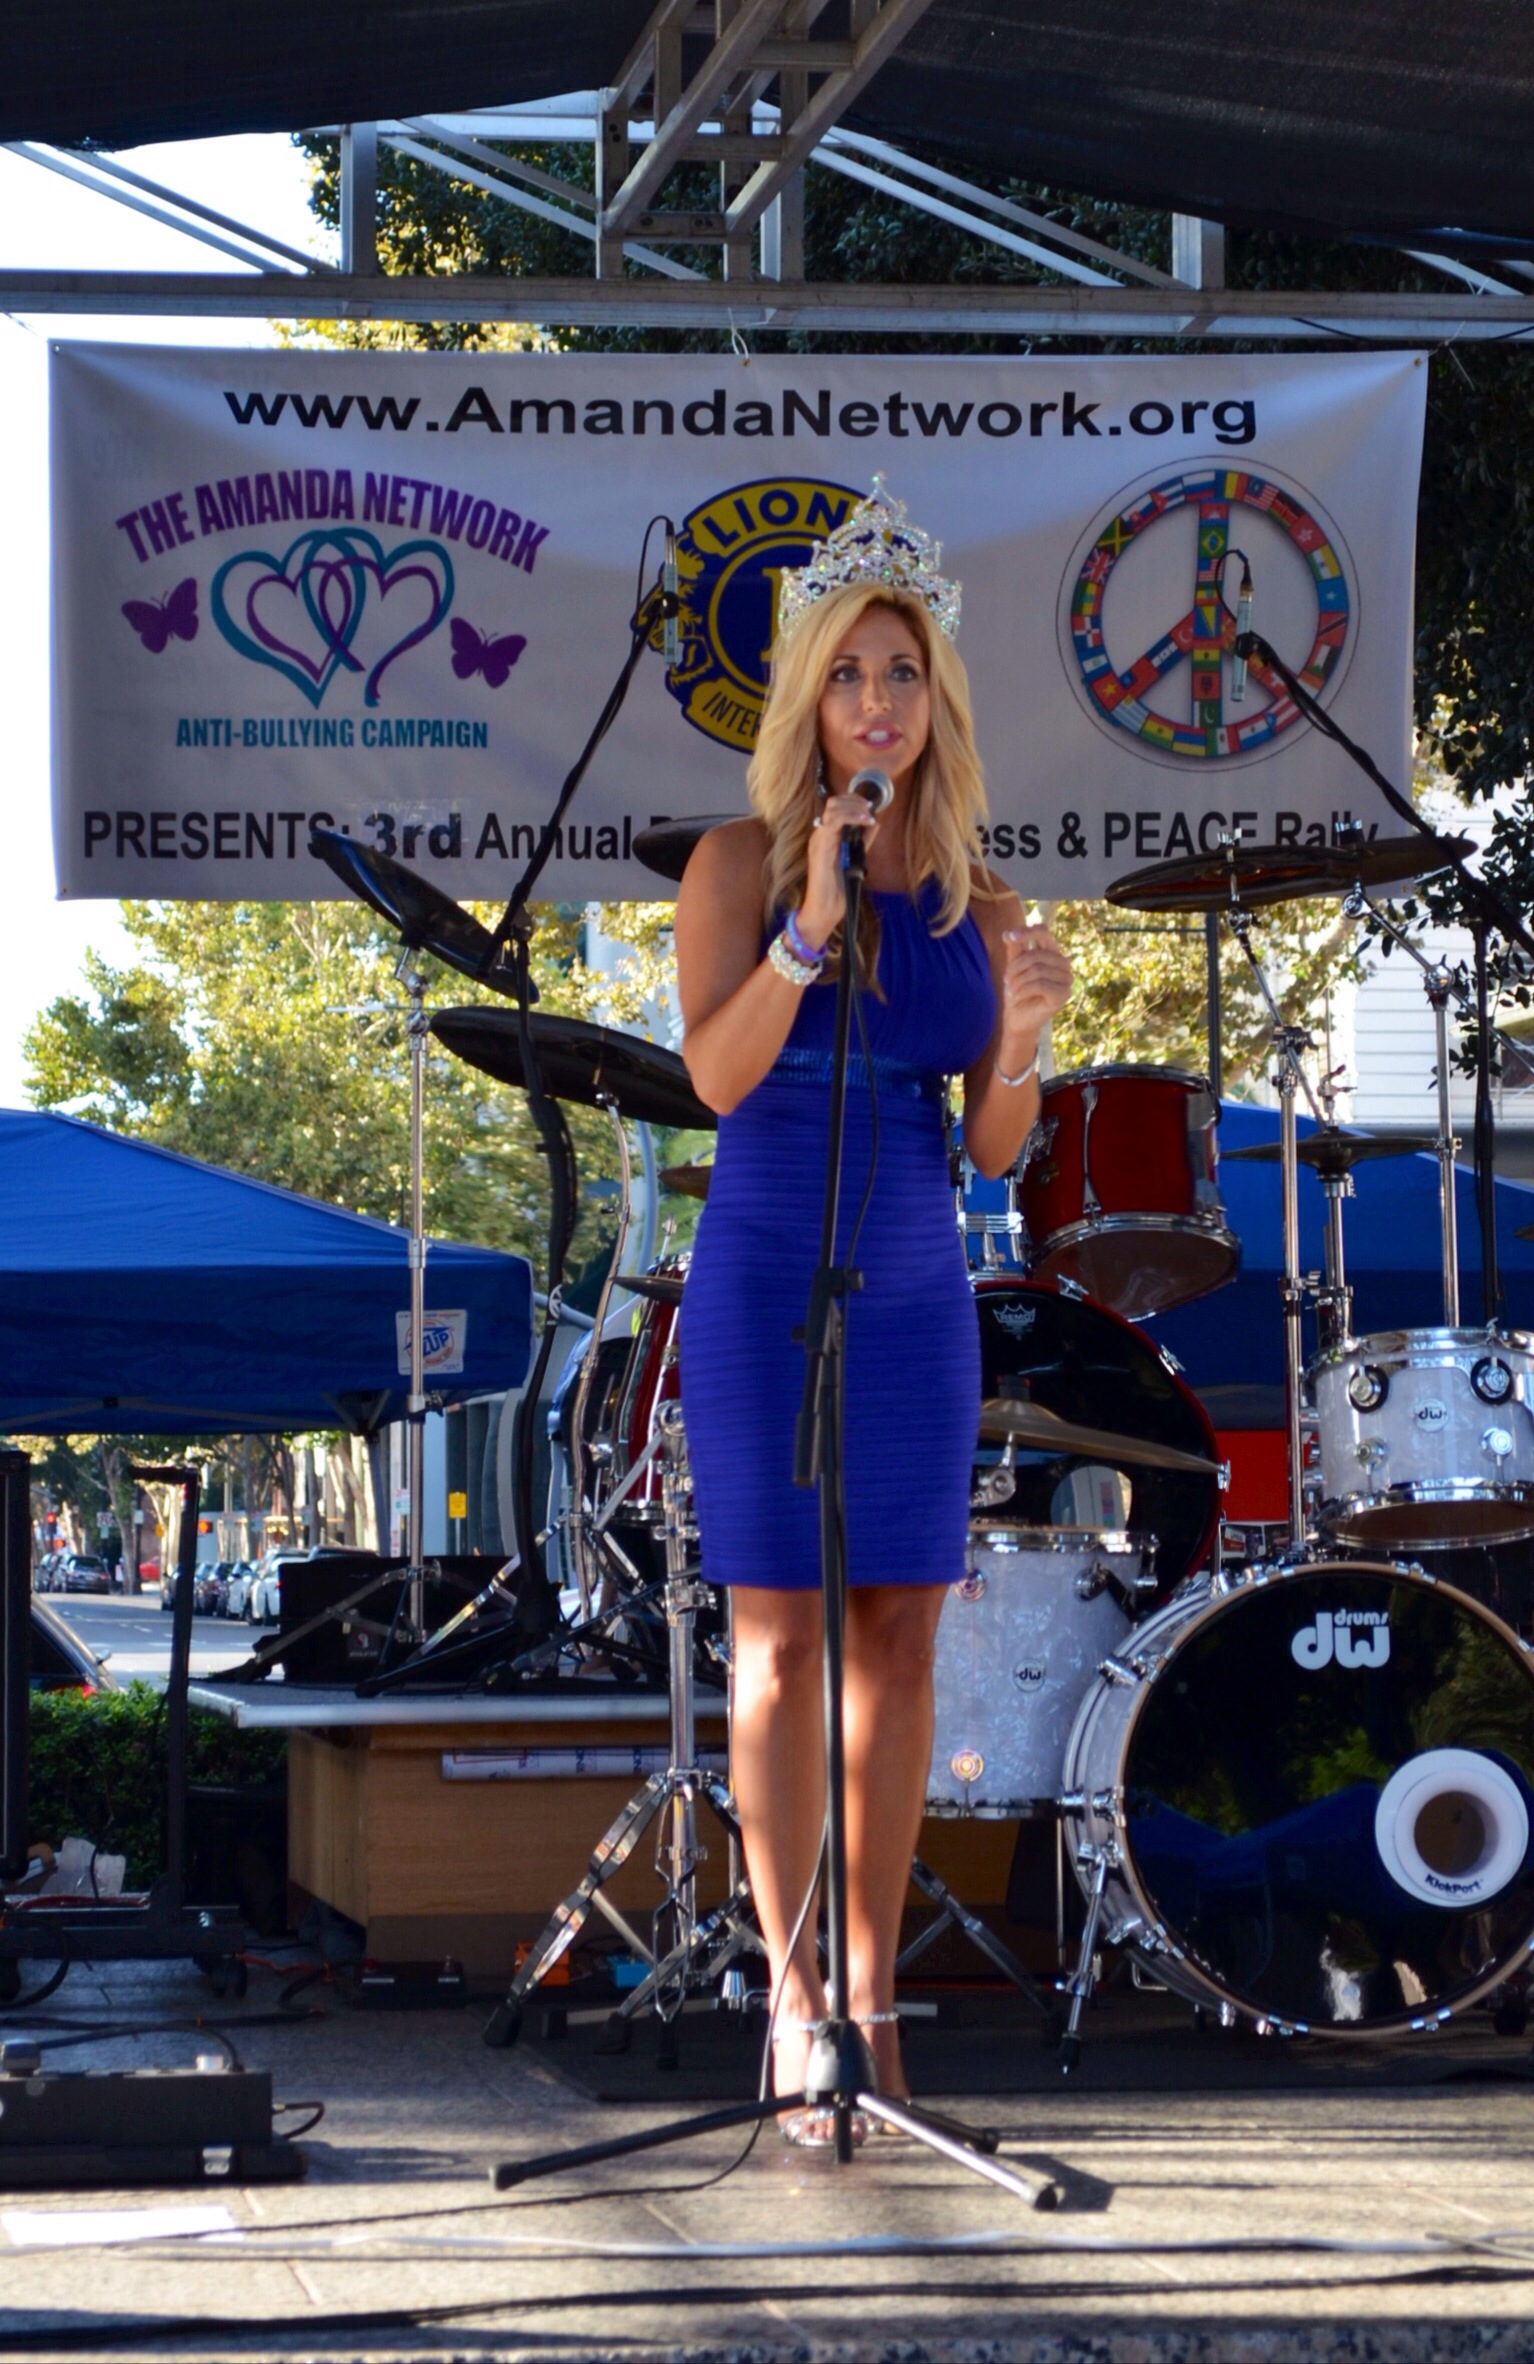 Carla Gonzalez speaking at The Amanda Network Anti-Bullying campaign, San Jose, CA.